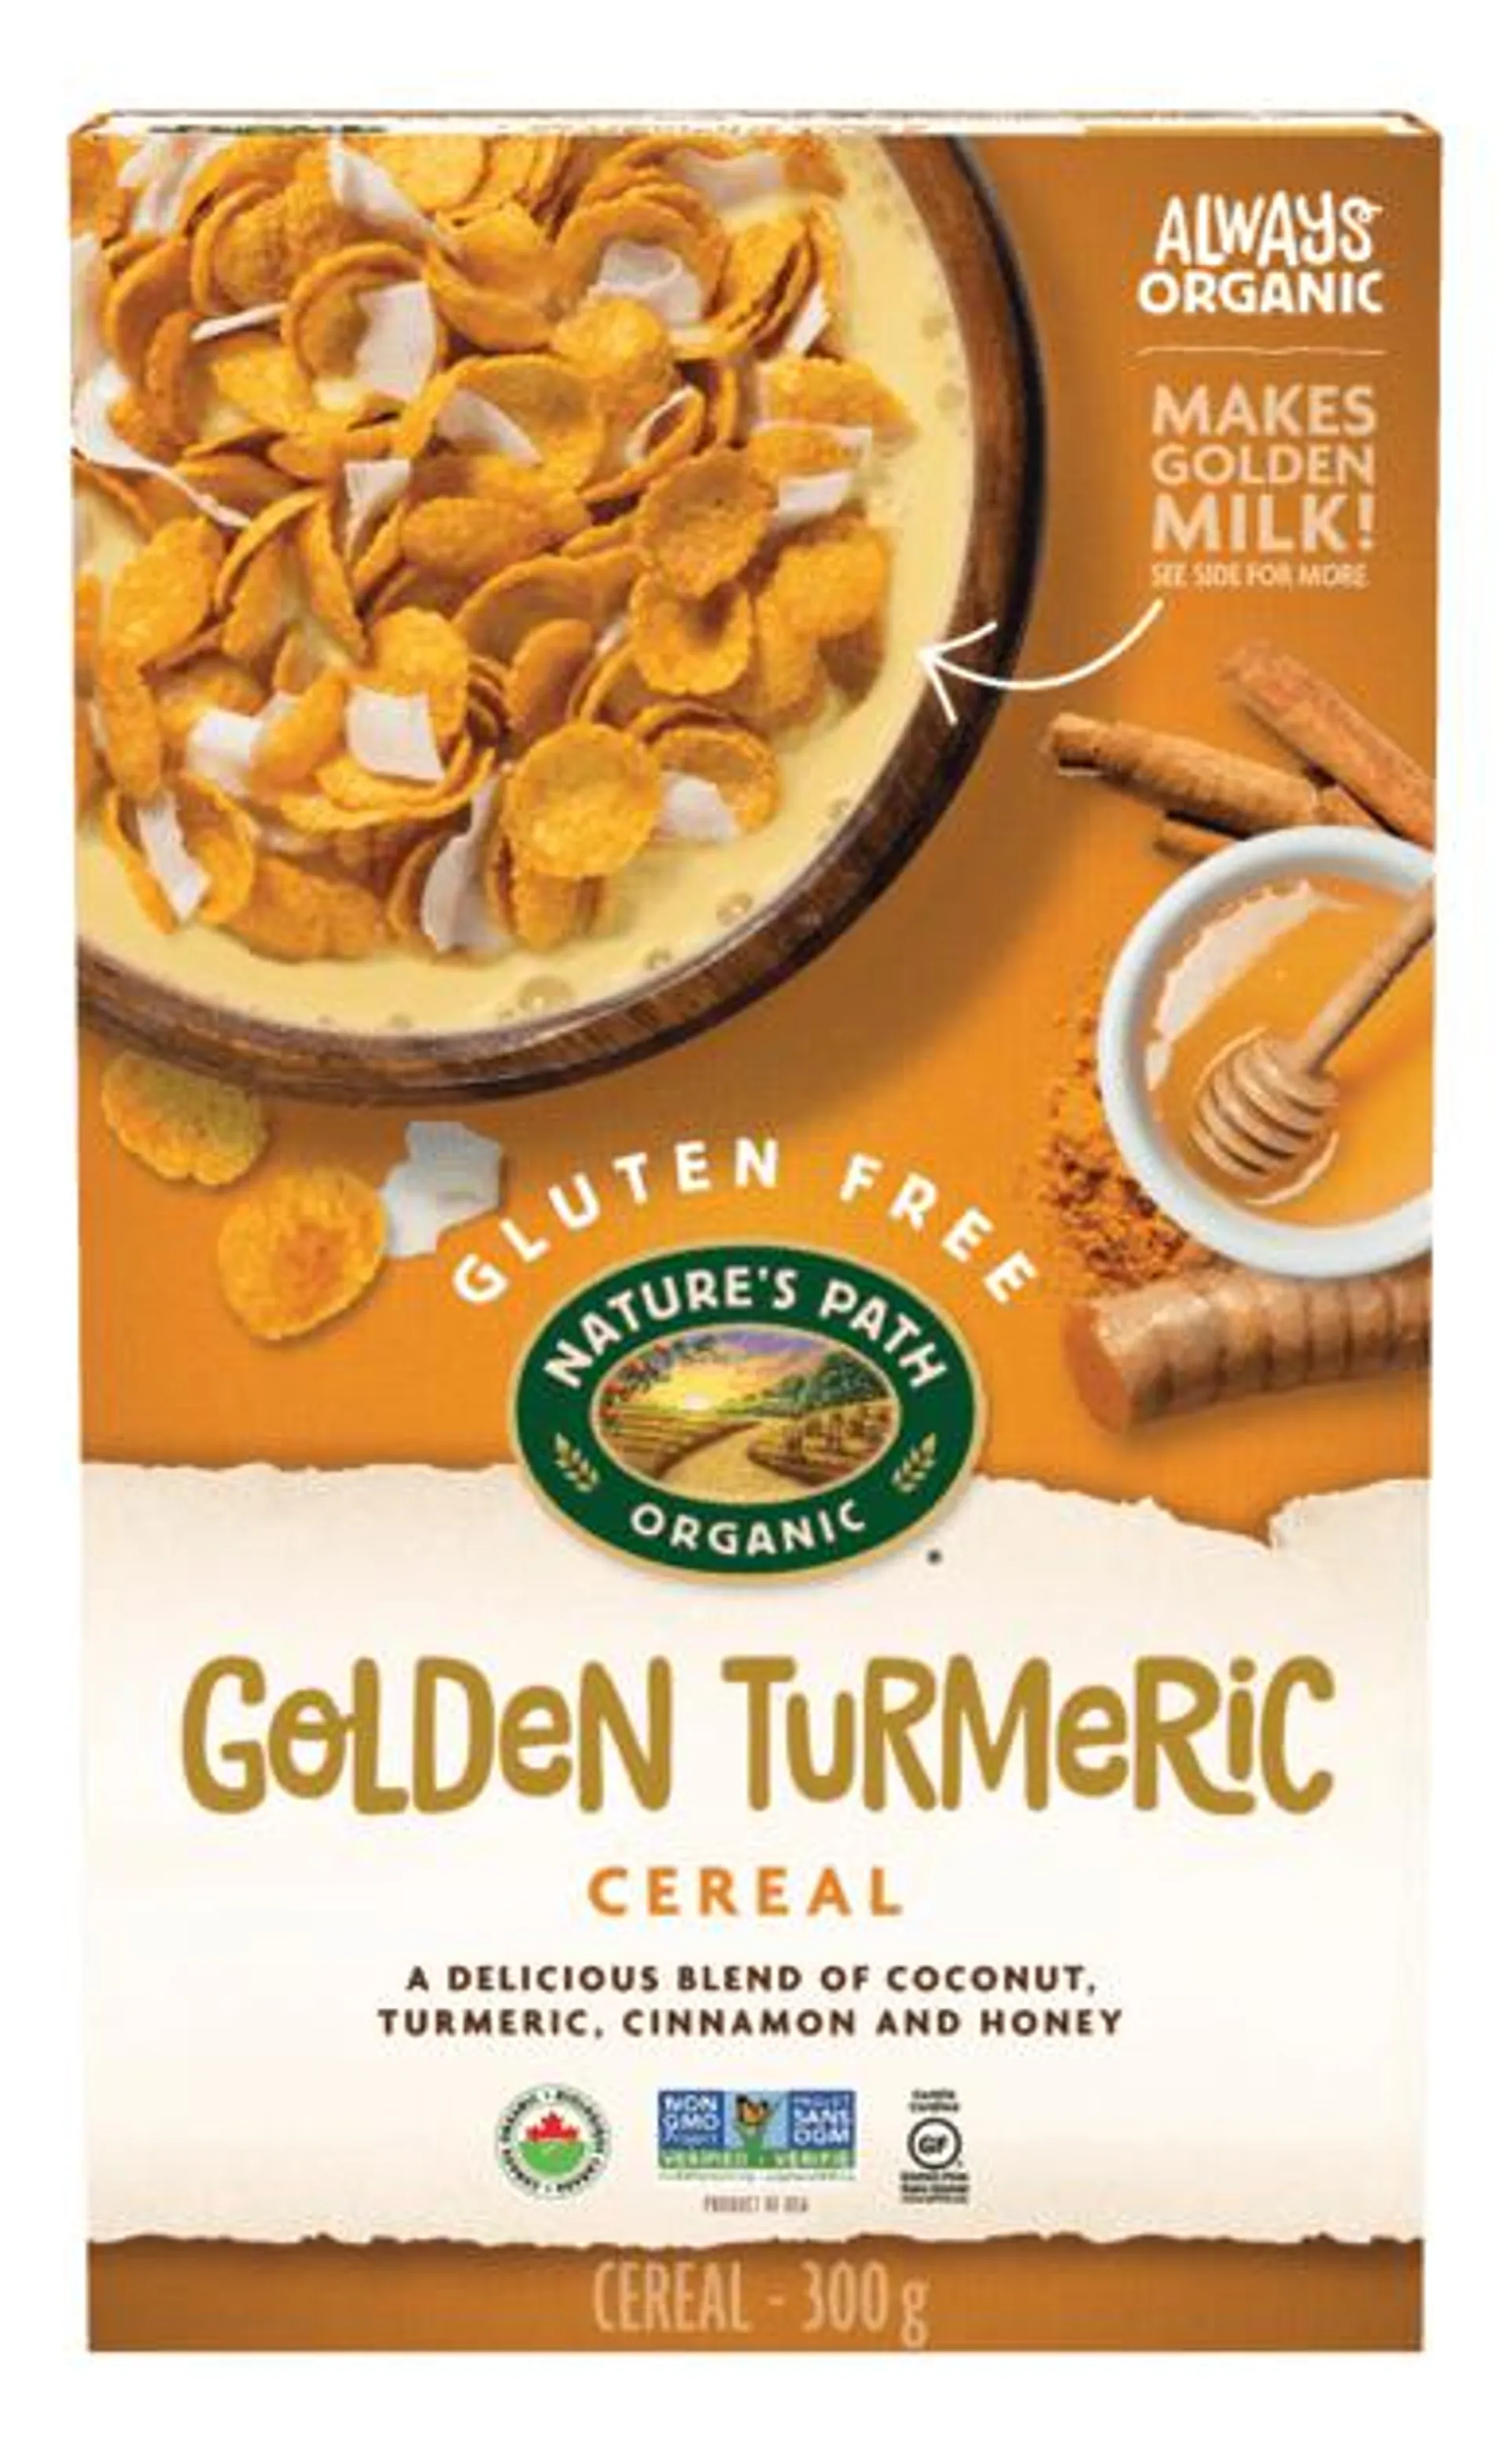 Gluten Free Golden Turmeric Cereal